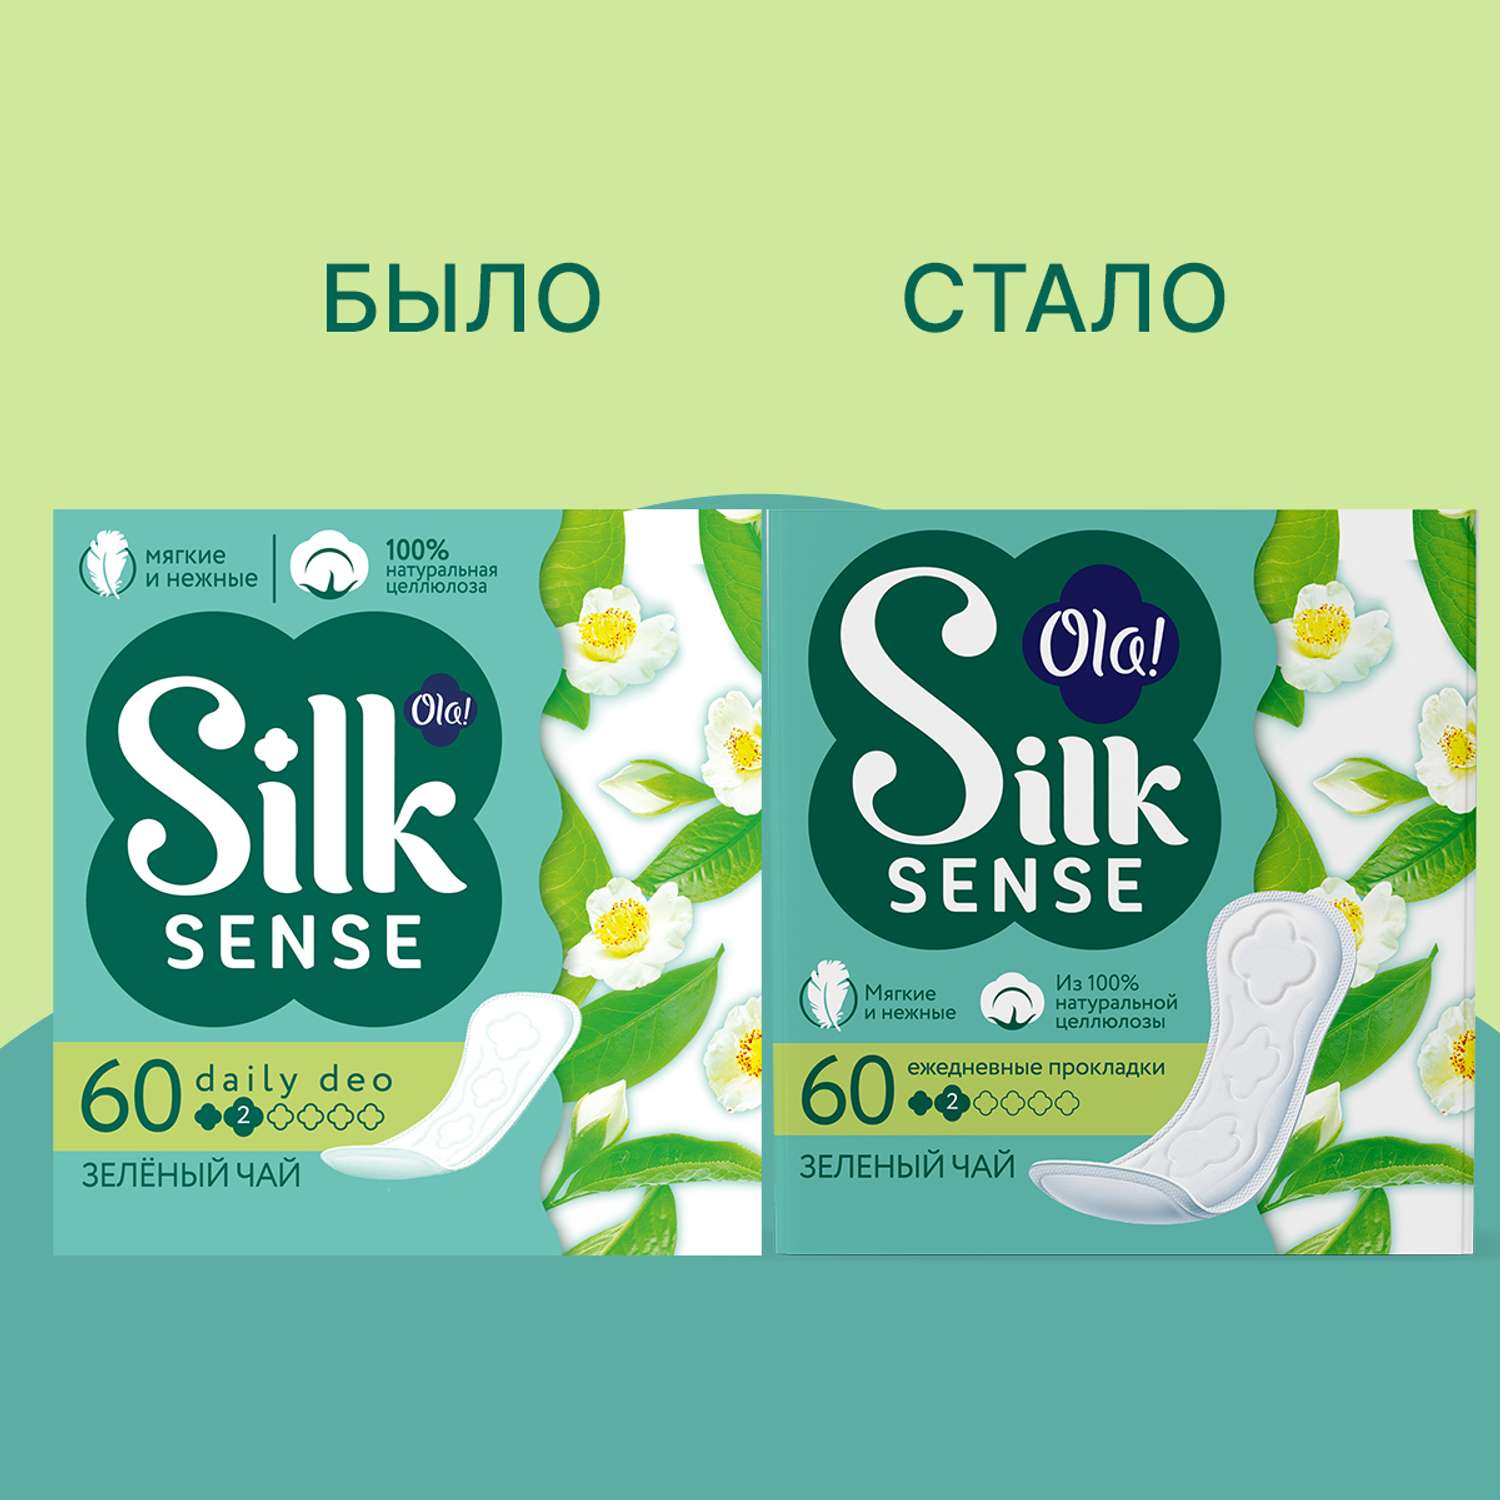 Ежедневные прокладки Ola! Silk Sense Daily Deo ежедневные Зеленый чай 60x3 уп.180 - фото 2